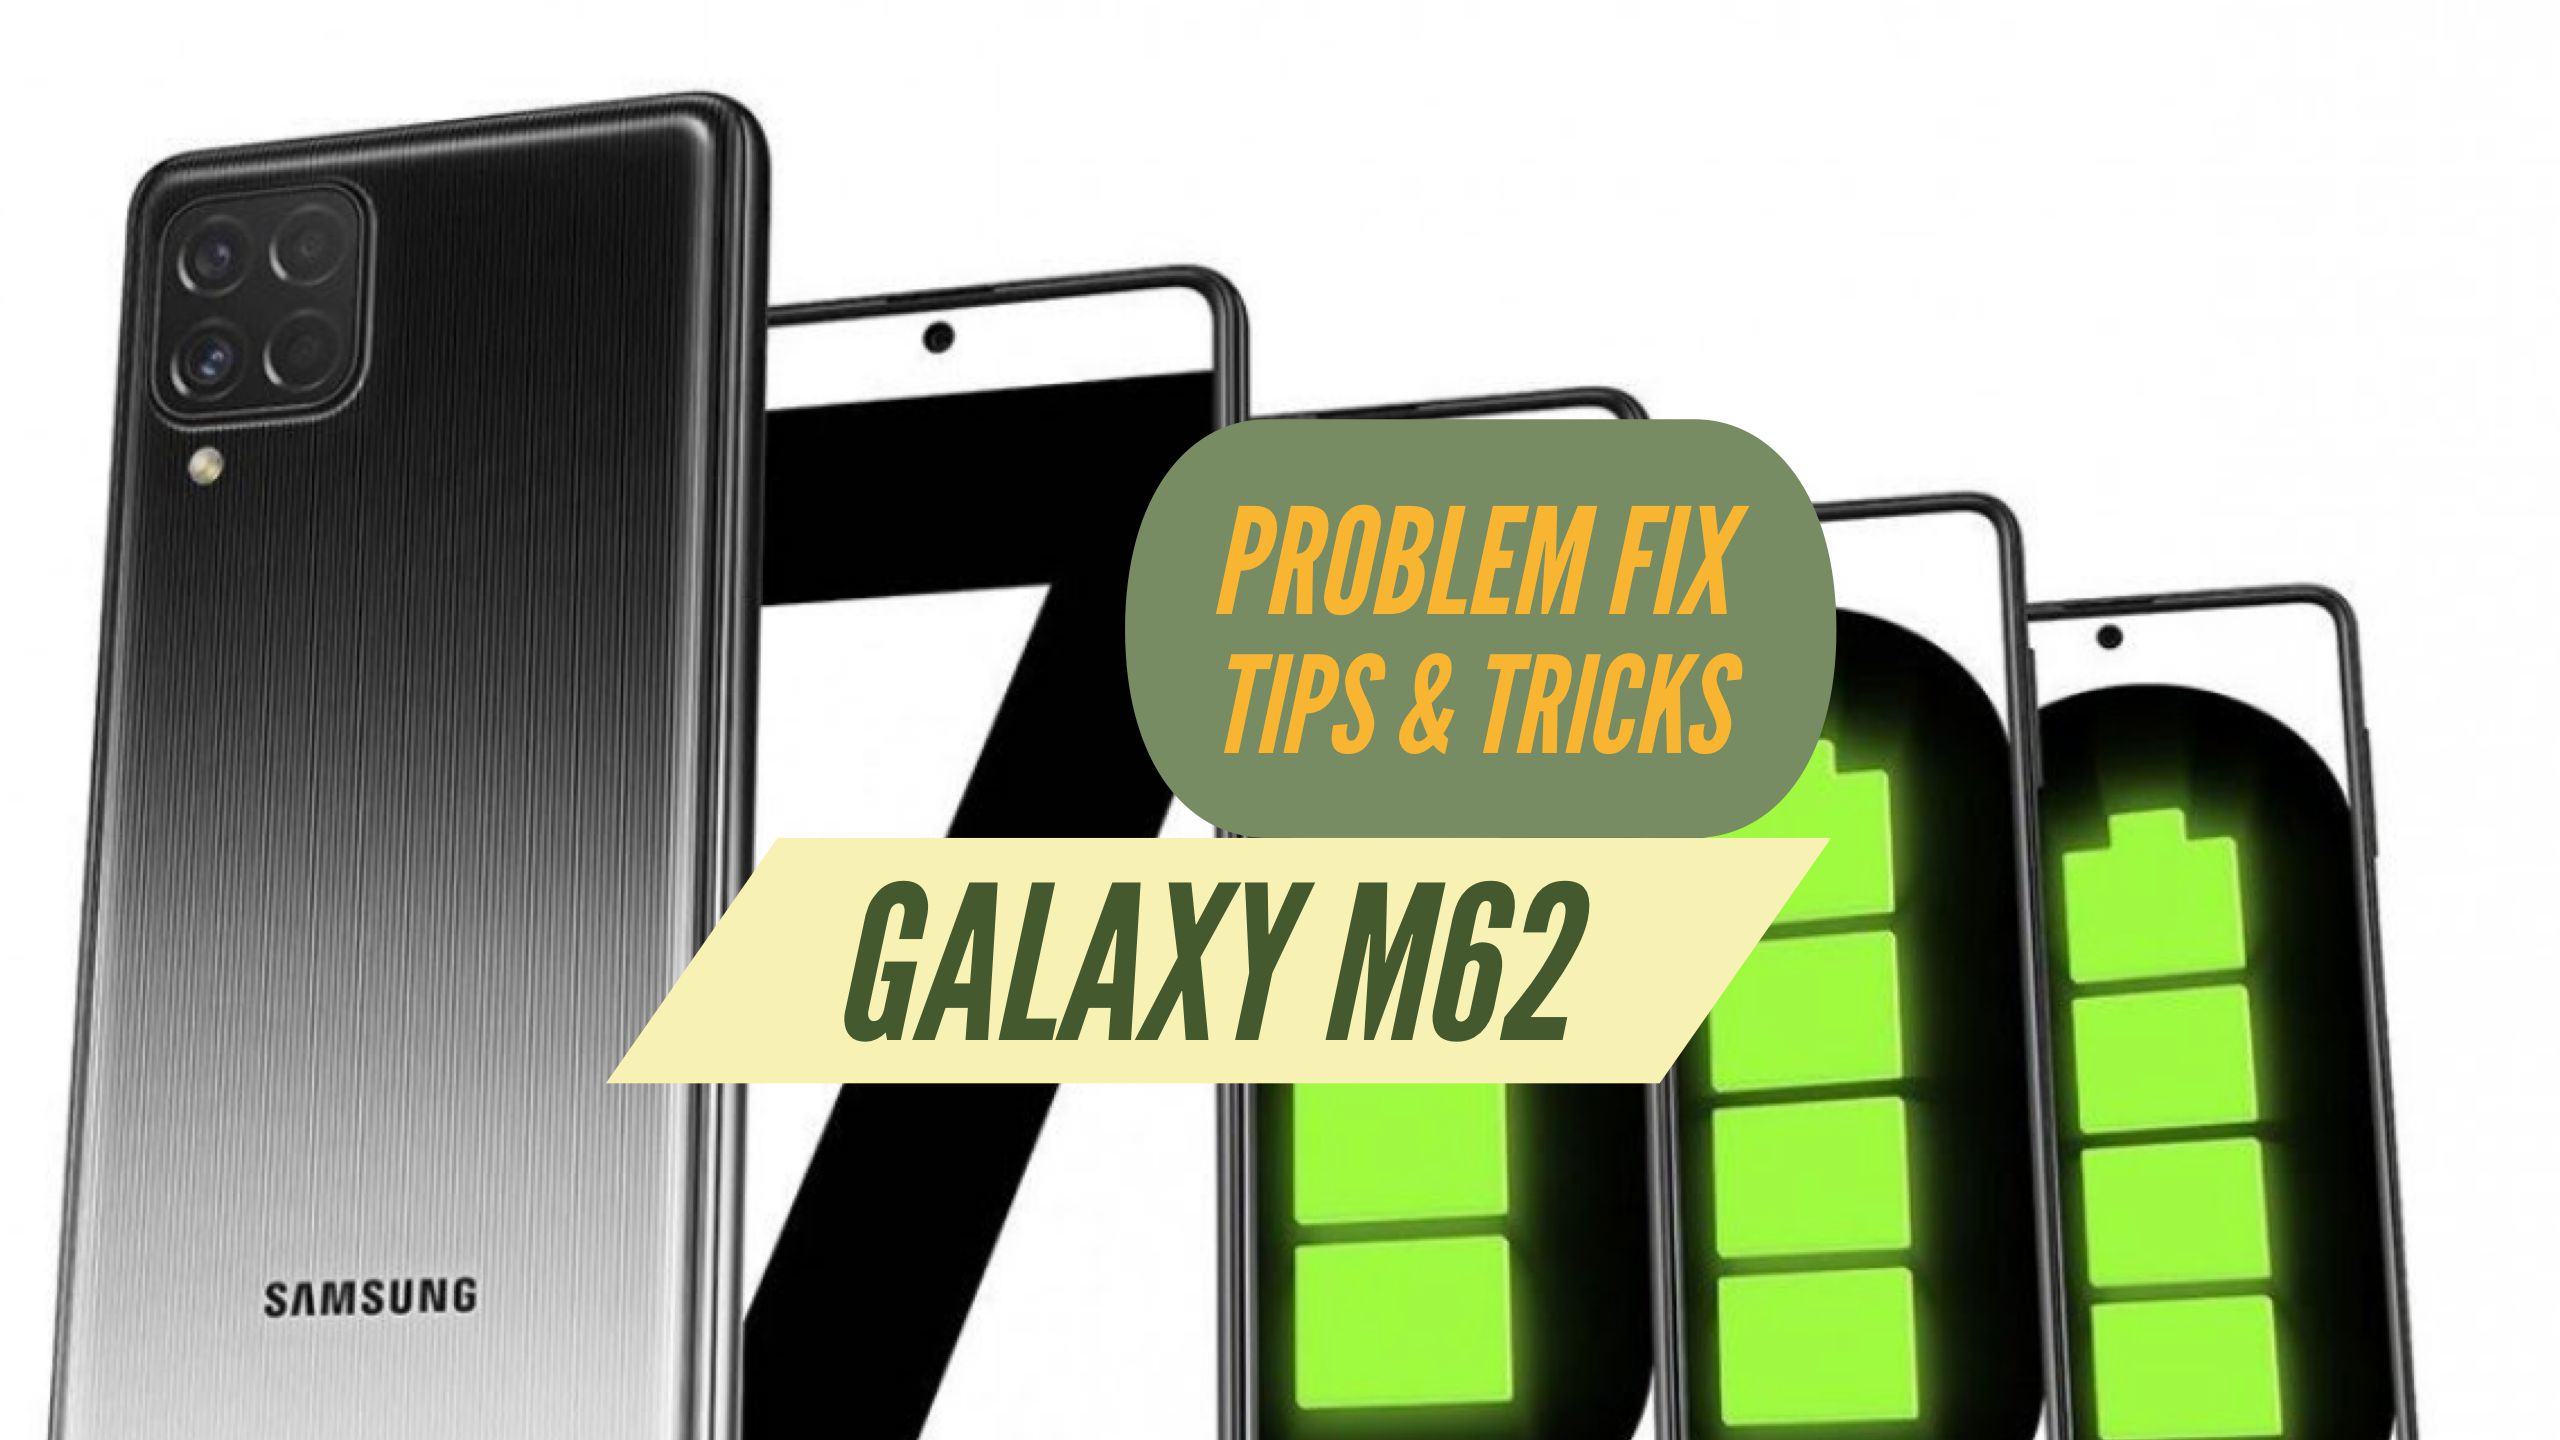 Galaxy M62 Problem Fix Issues SOlution TIPS & TRICKS